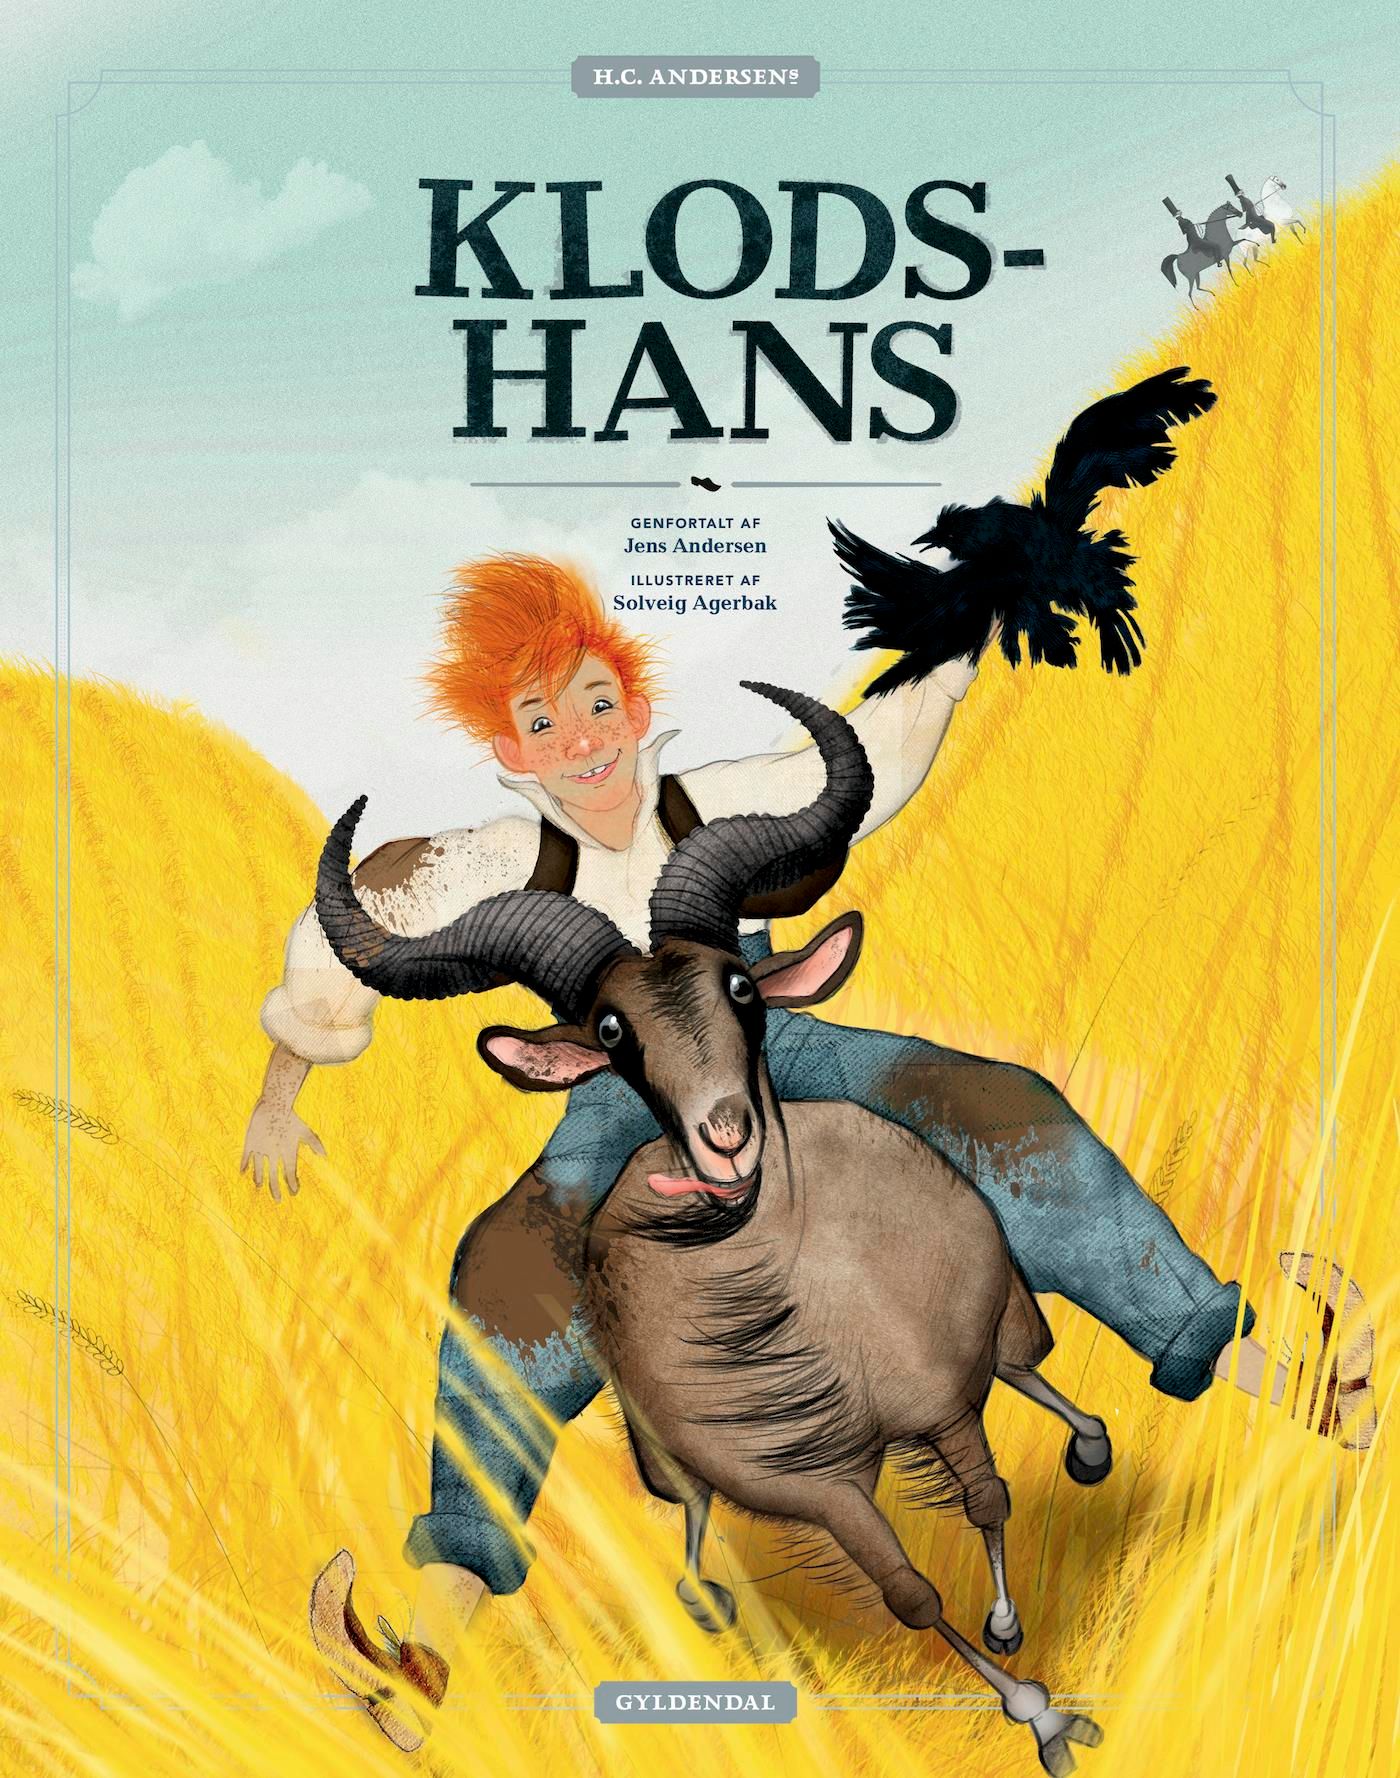 H.C. Andersens Klods-Hans - Lyt&læs, eBook by Solveig Agerbak, Jens Andersen